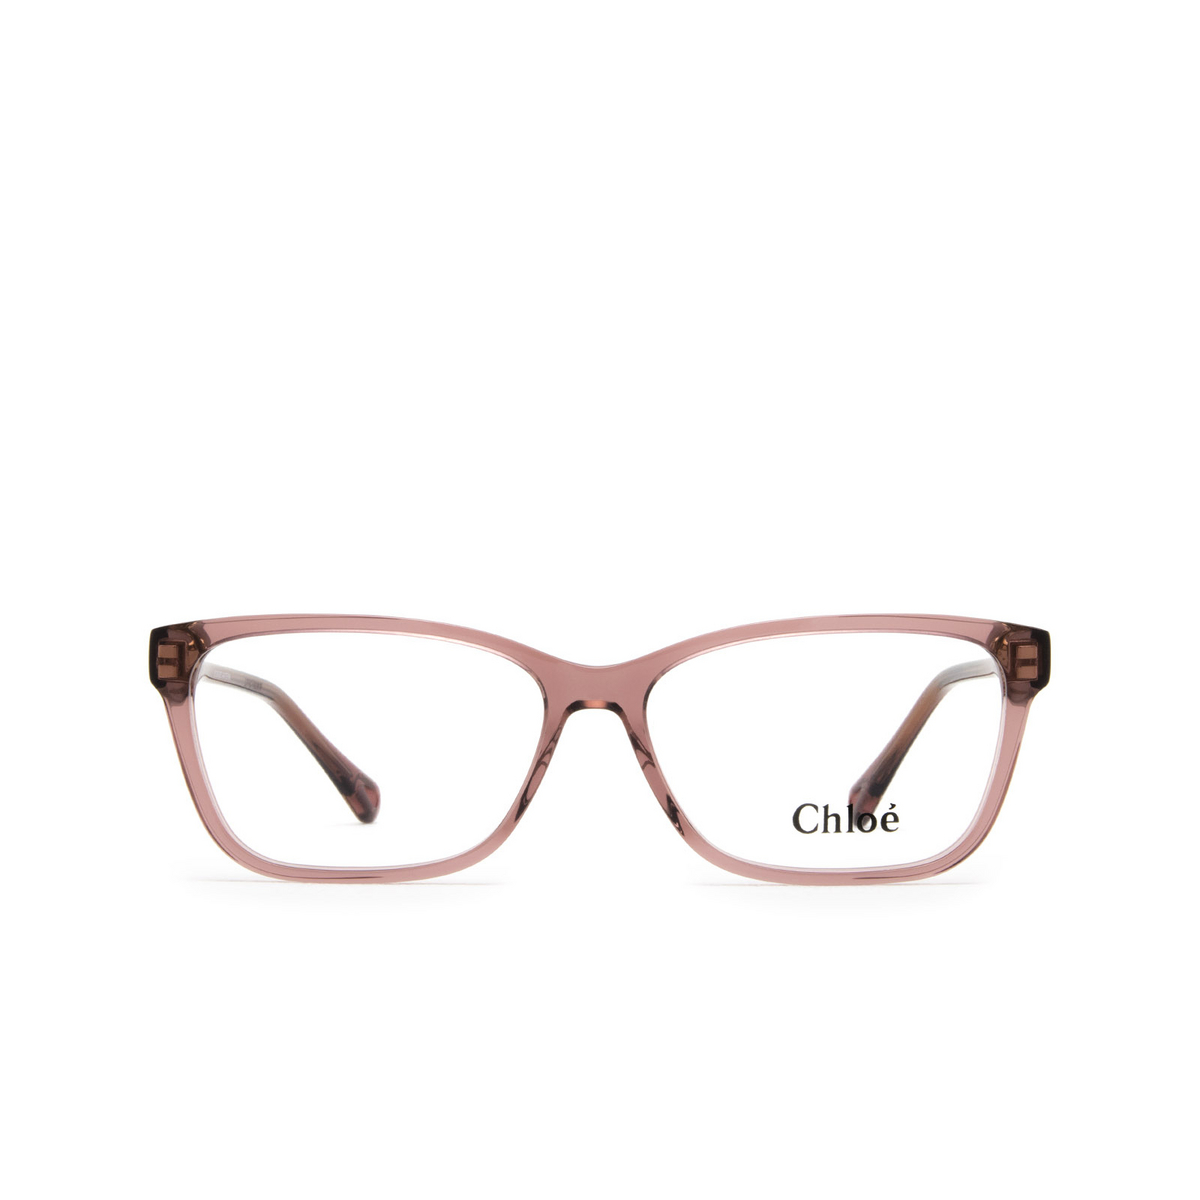 Chloé® Rectangle Eyeglasses: CH0116O color 008 Transparent Pink - front view